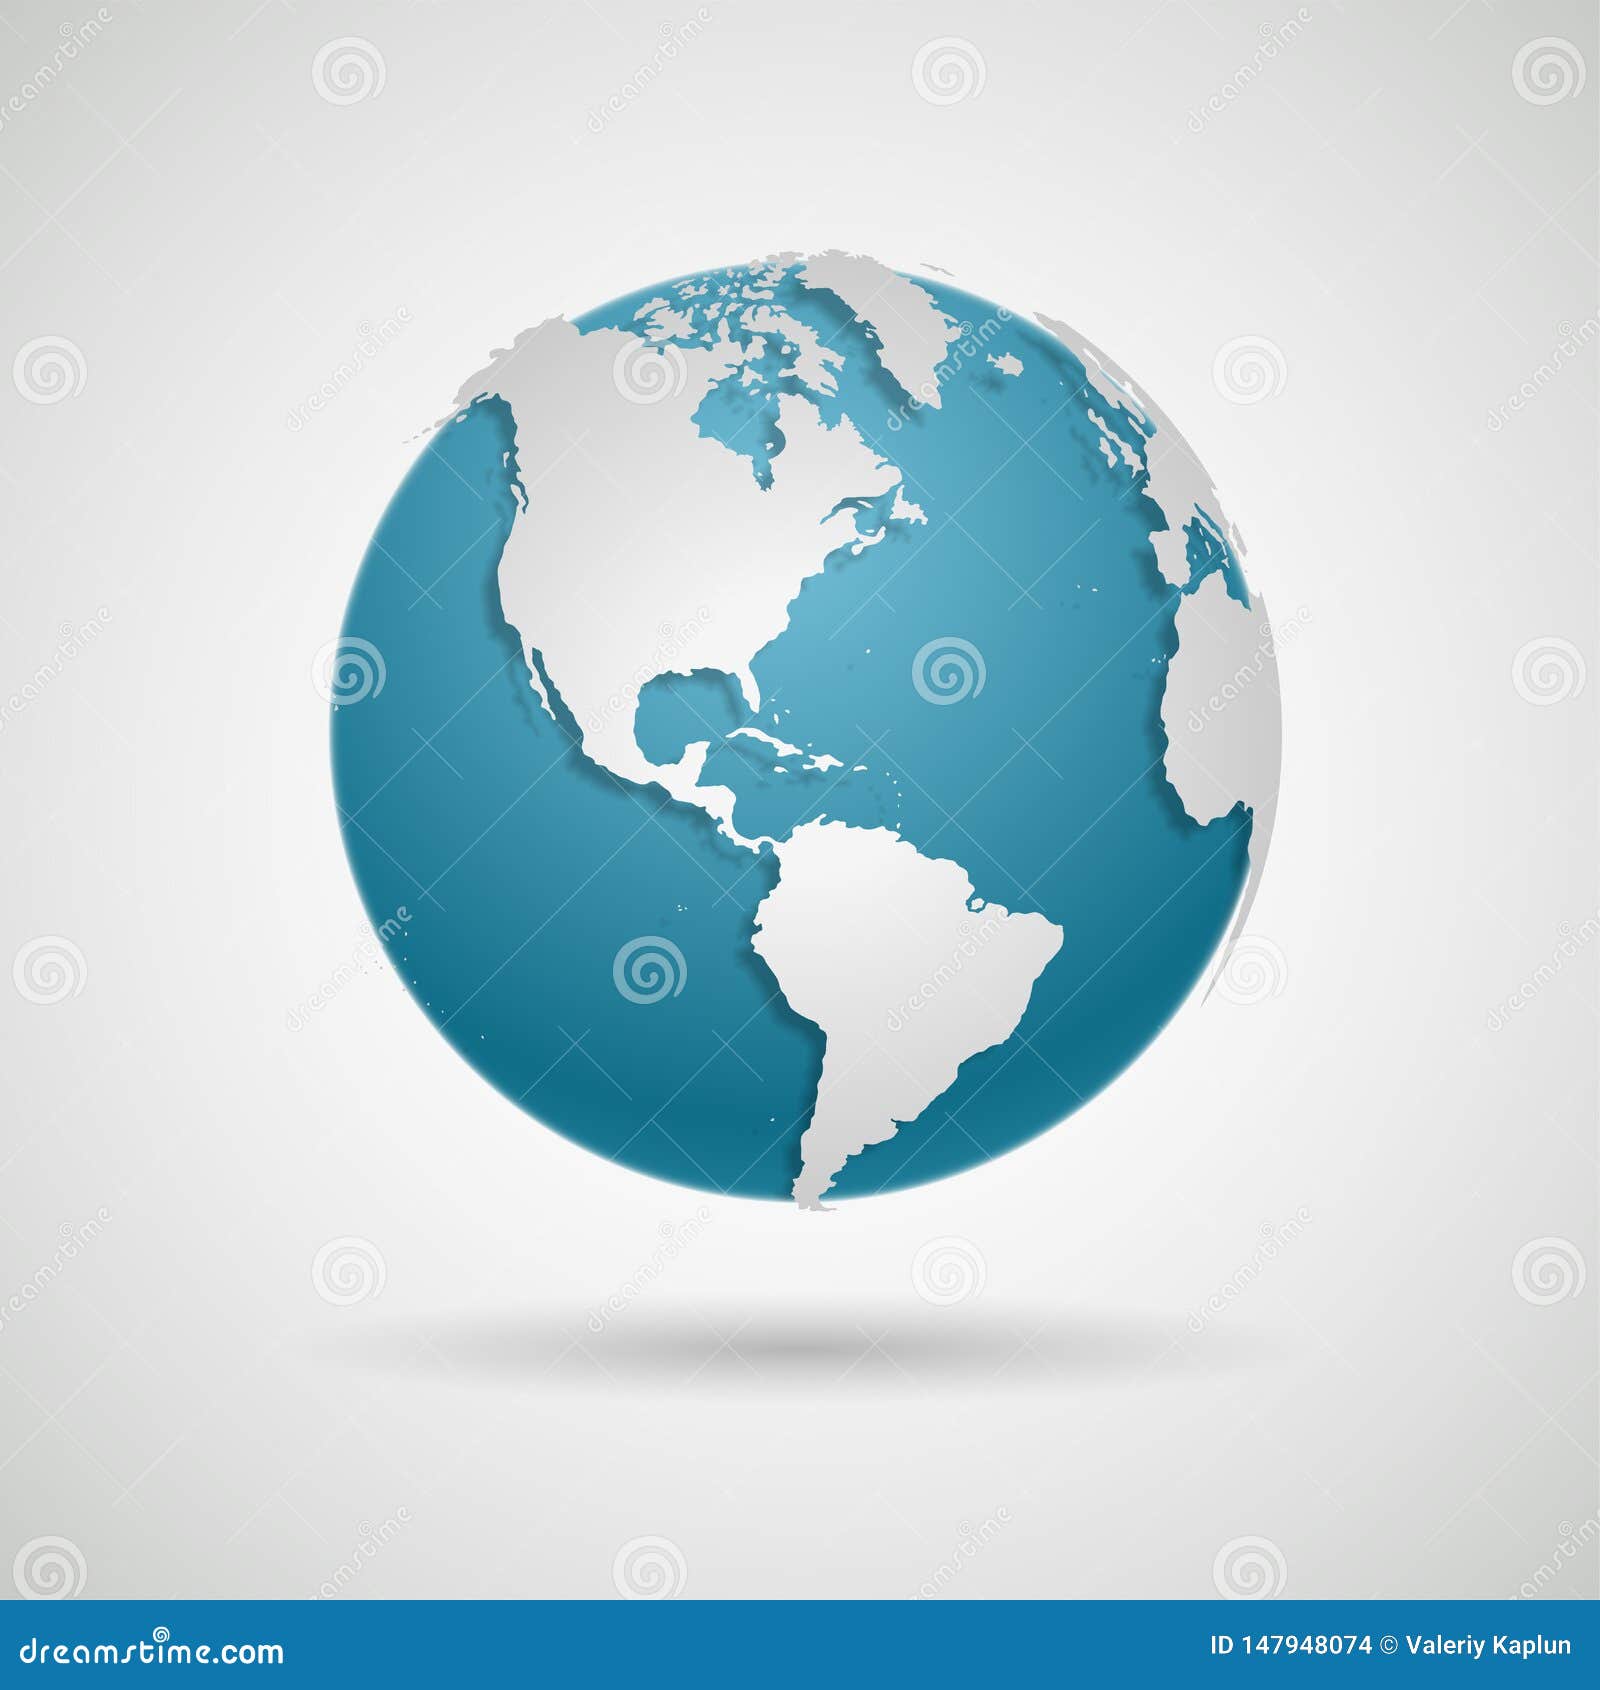 globe icon round world map vector stock illustration